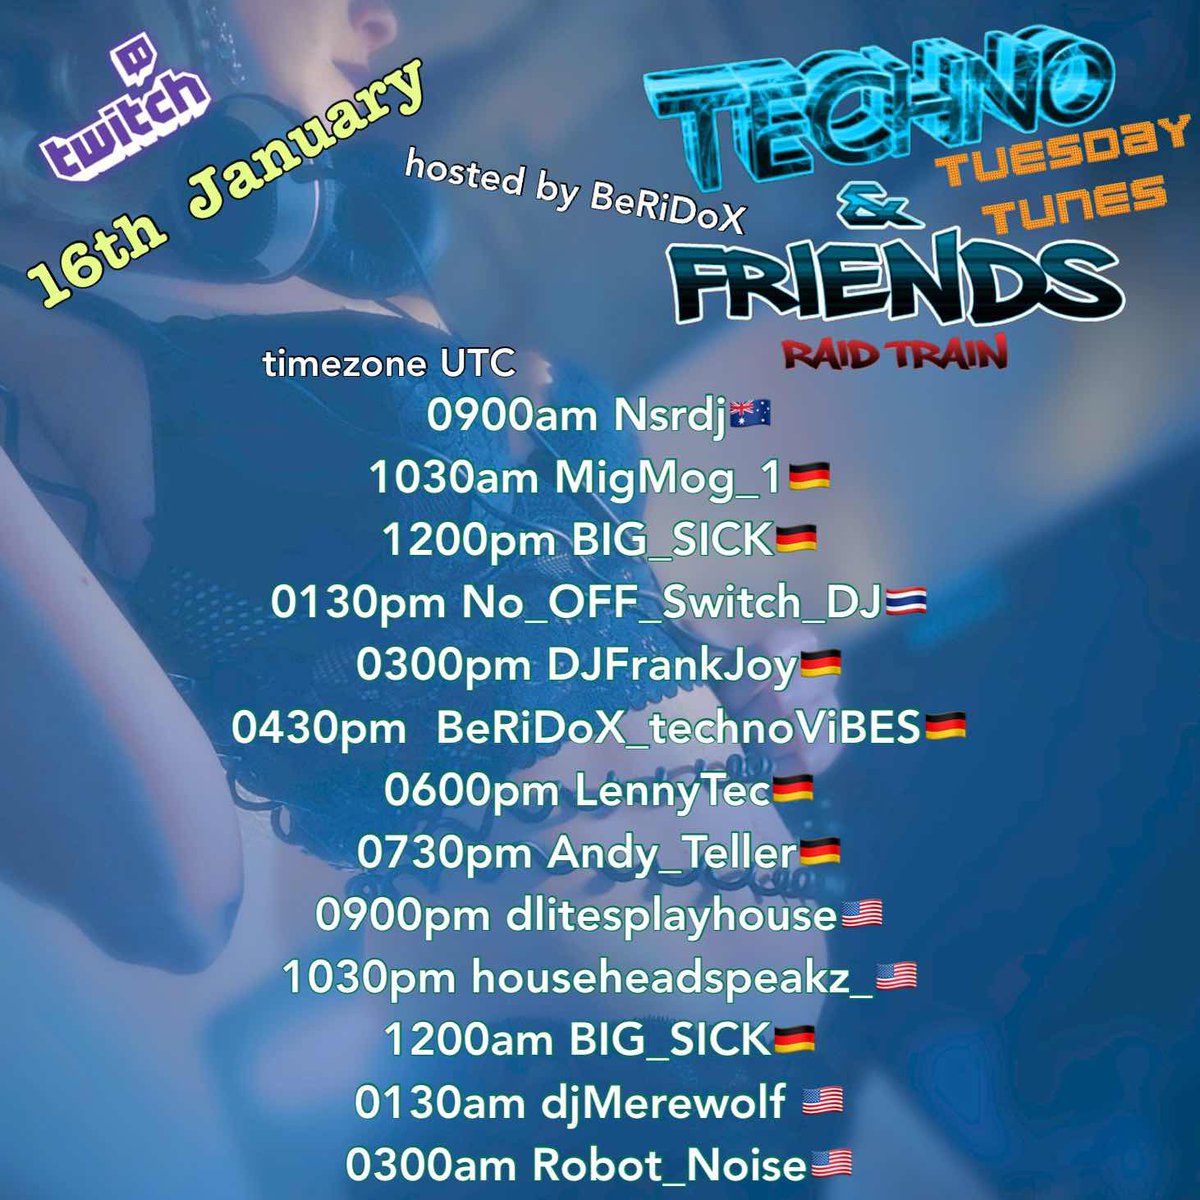 Techno and Friends Tuesday Tunes International RT kickoff today starting at 9am UTC(3am CST).  Follow these DJs on Twitch!!
#technoandfriends #tuesdaytunes #raidtrain #openformat #undergrounddancemusic #househeadspeakz